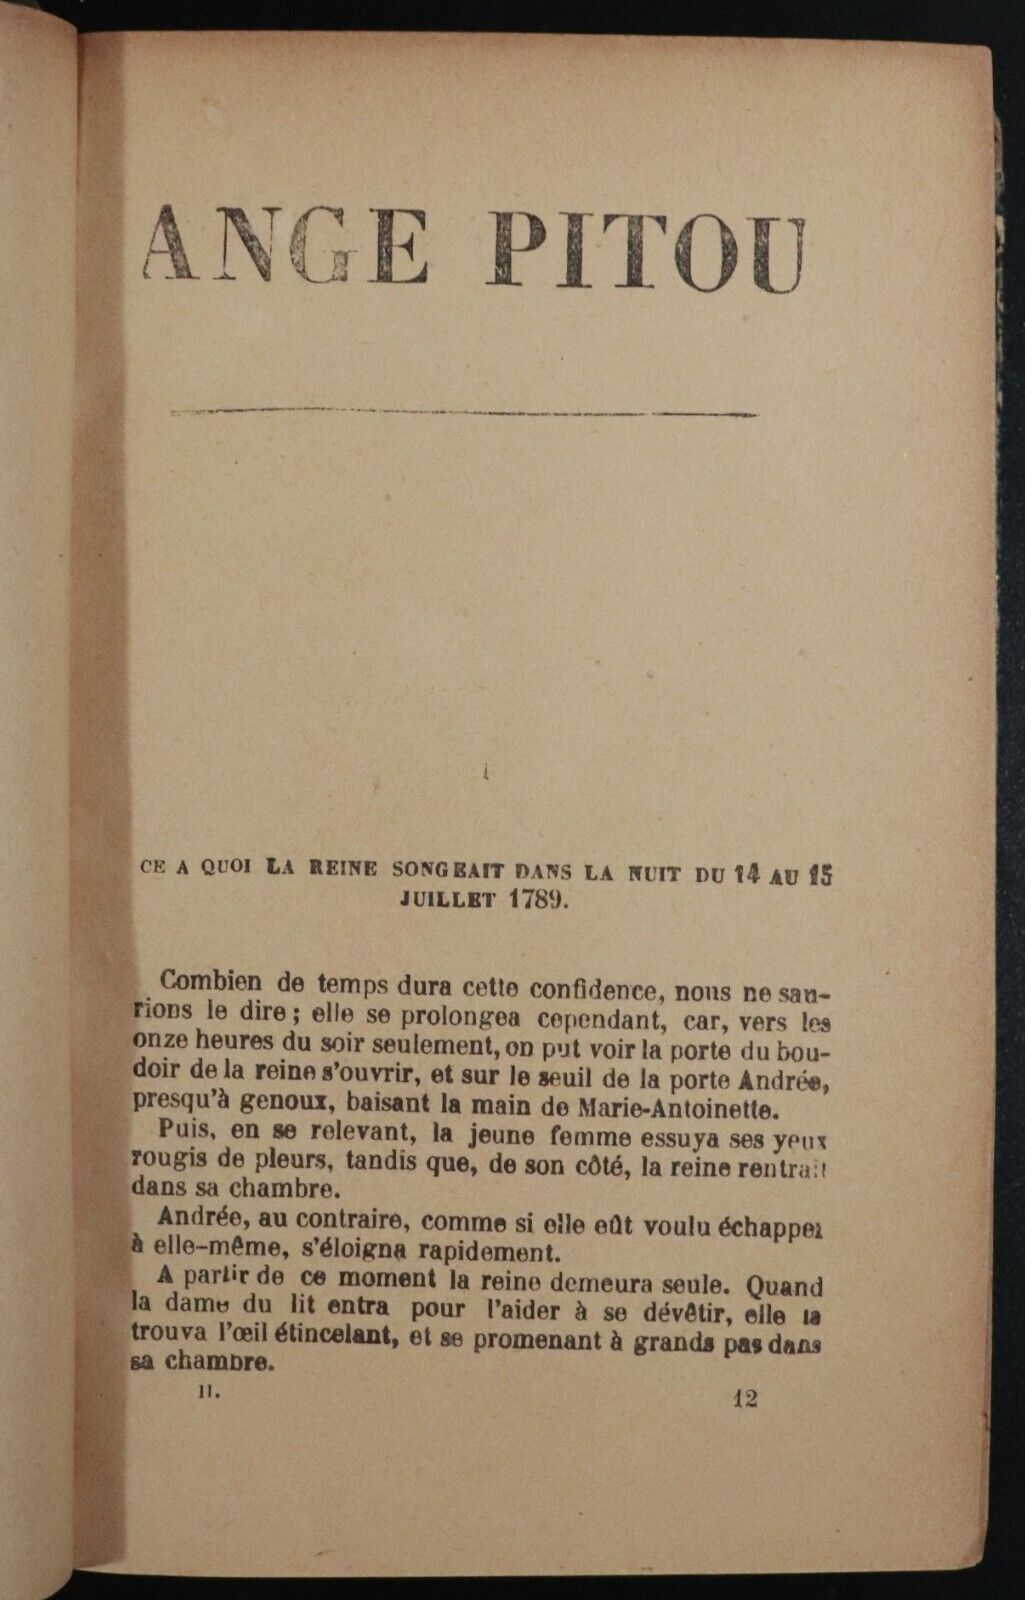 c1880 2vol Ange Pitou by Alexandre Dumas Antiquarian French Fiction Books